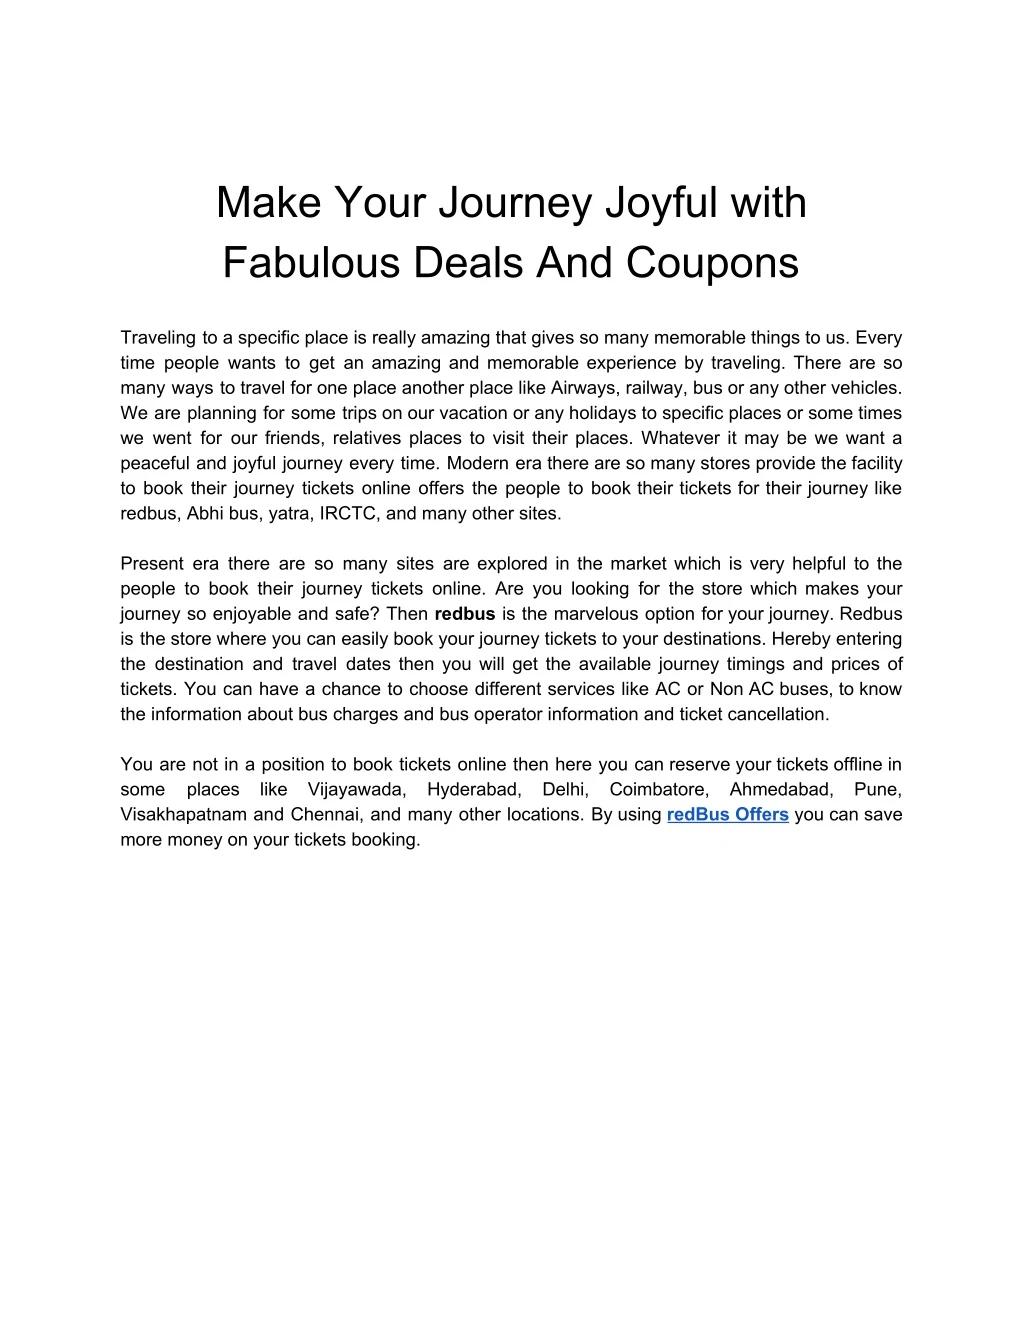 make your journey joyful with fabulous deals